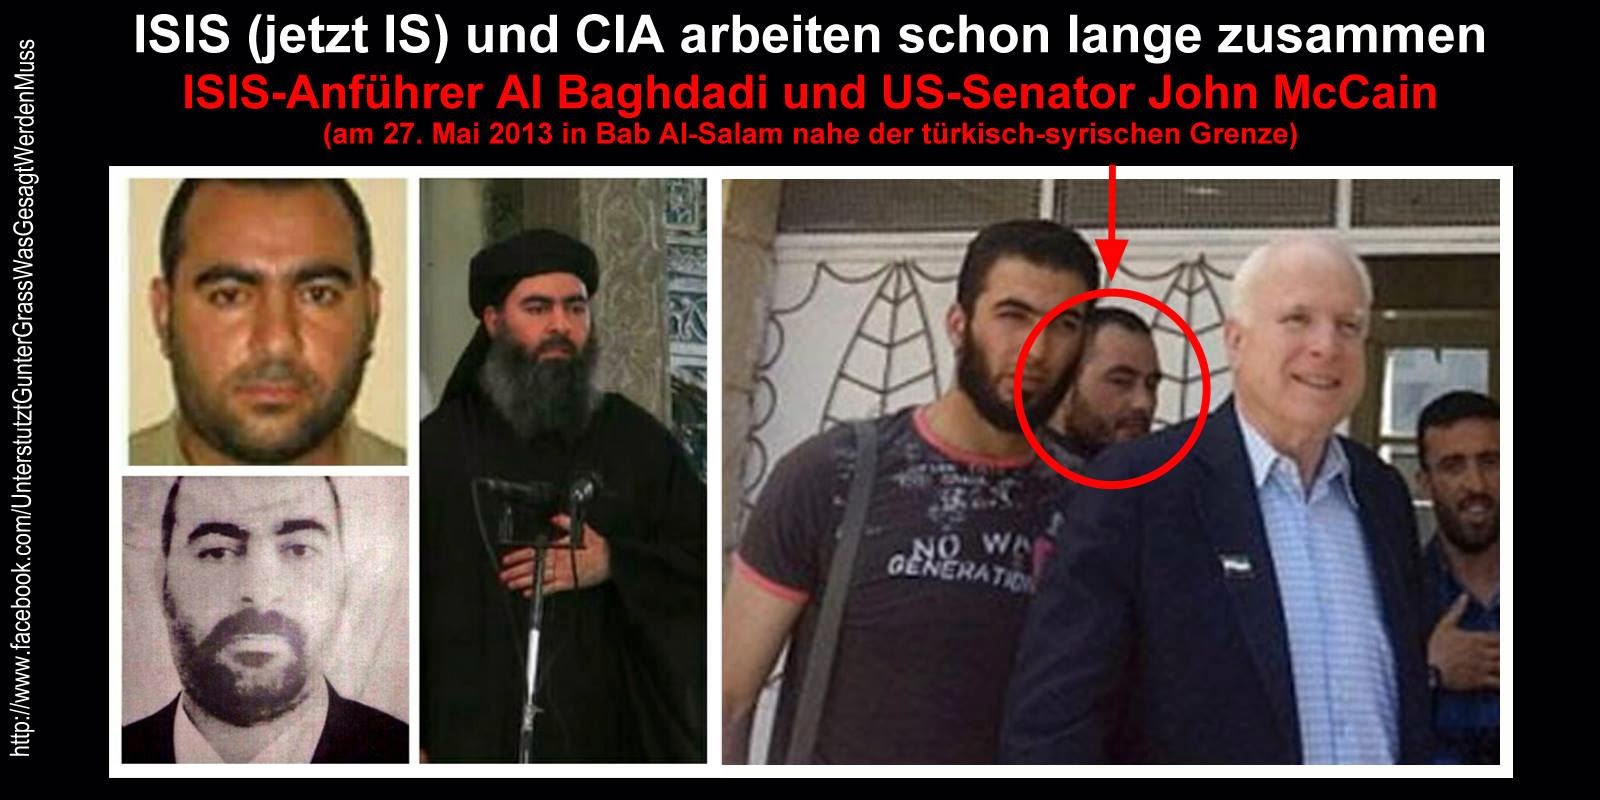 http://www.infiniteunknown.net/wp-content/uploads/2014/08/ISIS-leader-Al-Baghdadi-Mccain.jpg